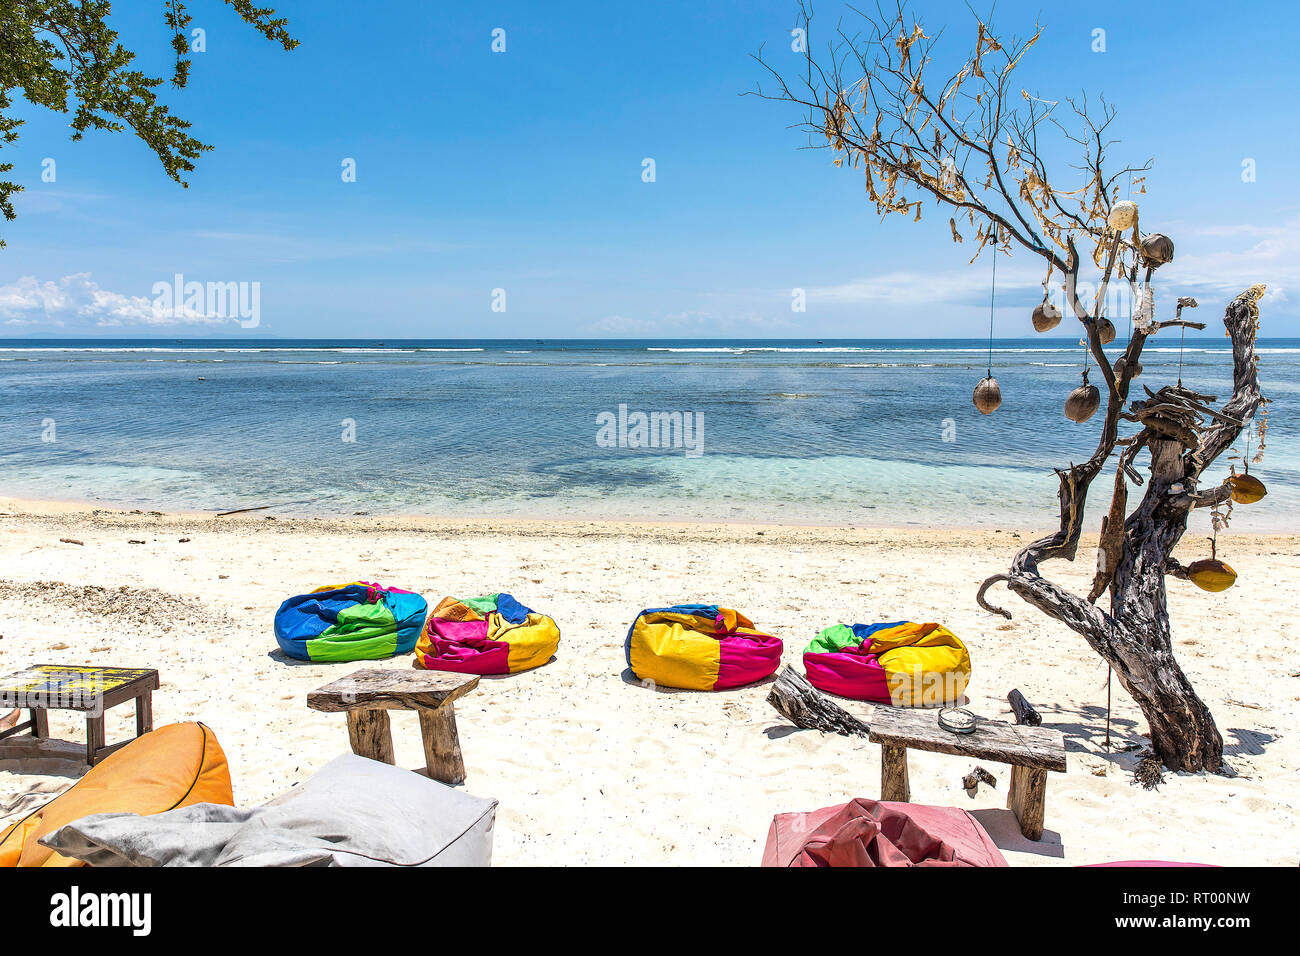 Colorful sunbeds on the beach of Gili Trawangan island, Indonesia. Stock Photo